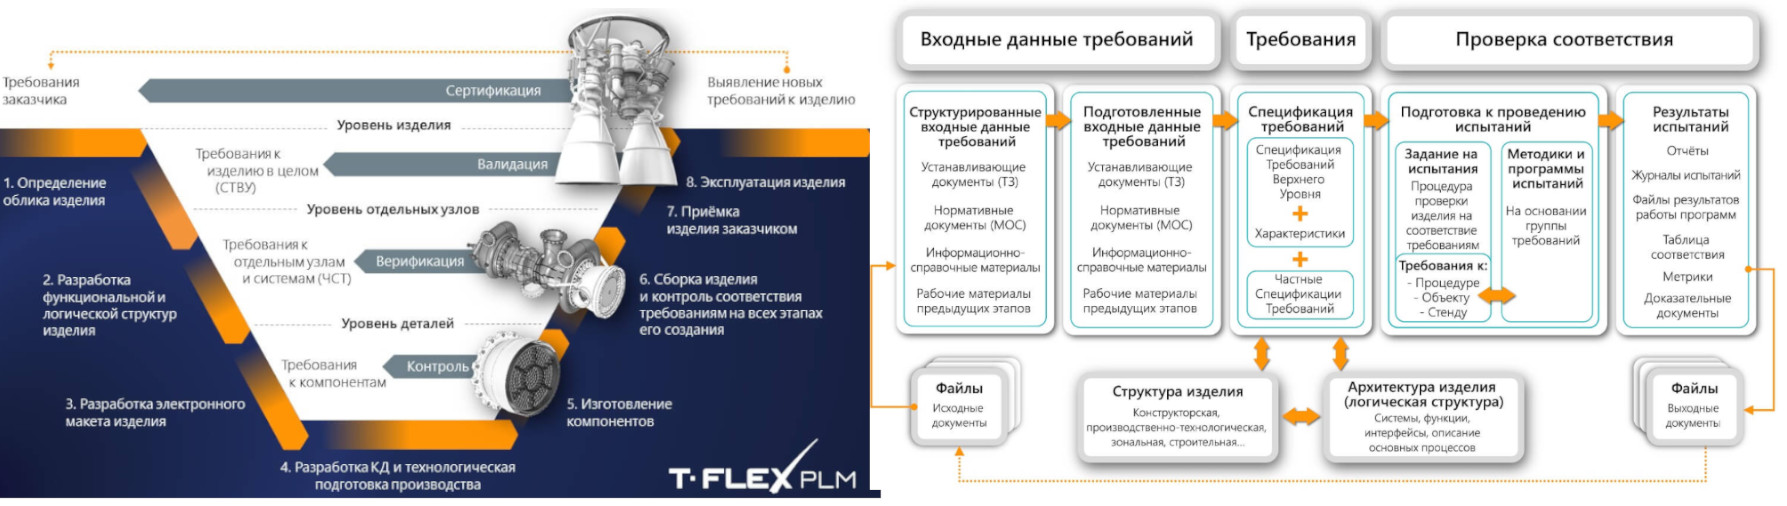 T-FLEX PLM управление требованиями